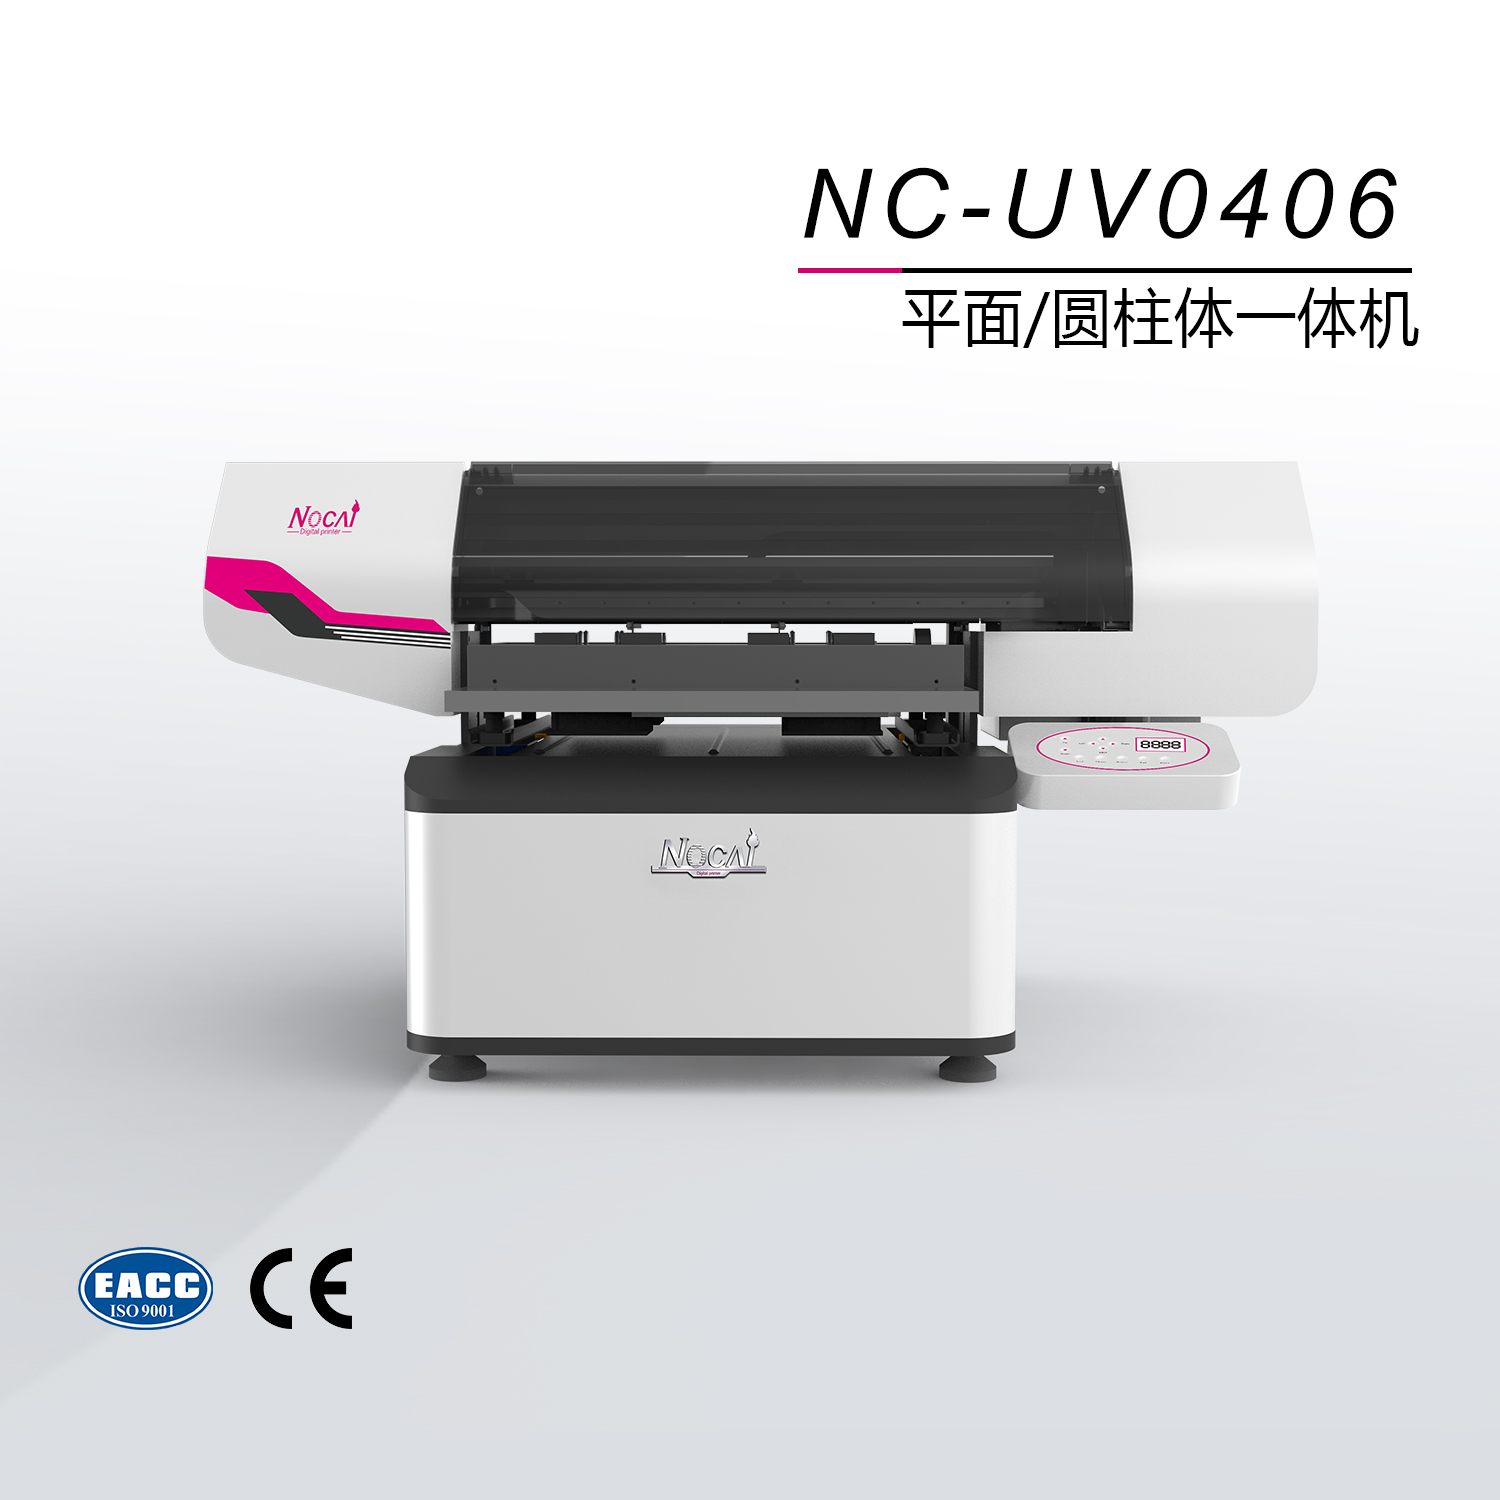 NC-UV0406 (第四代）-小型UV平板打印机